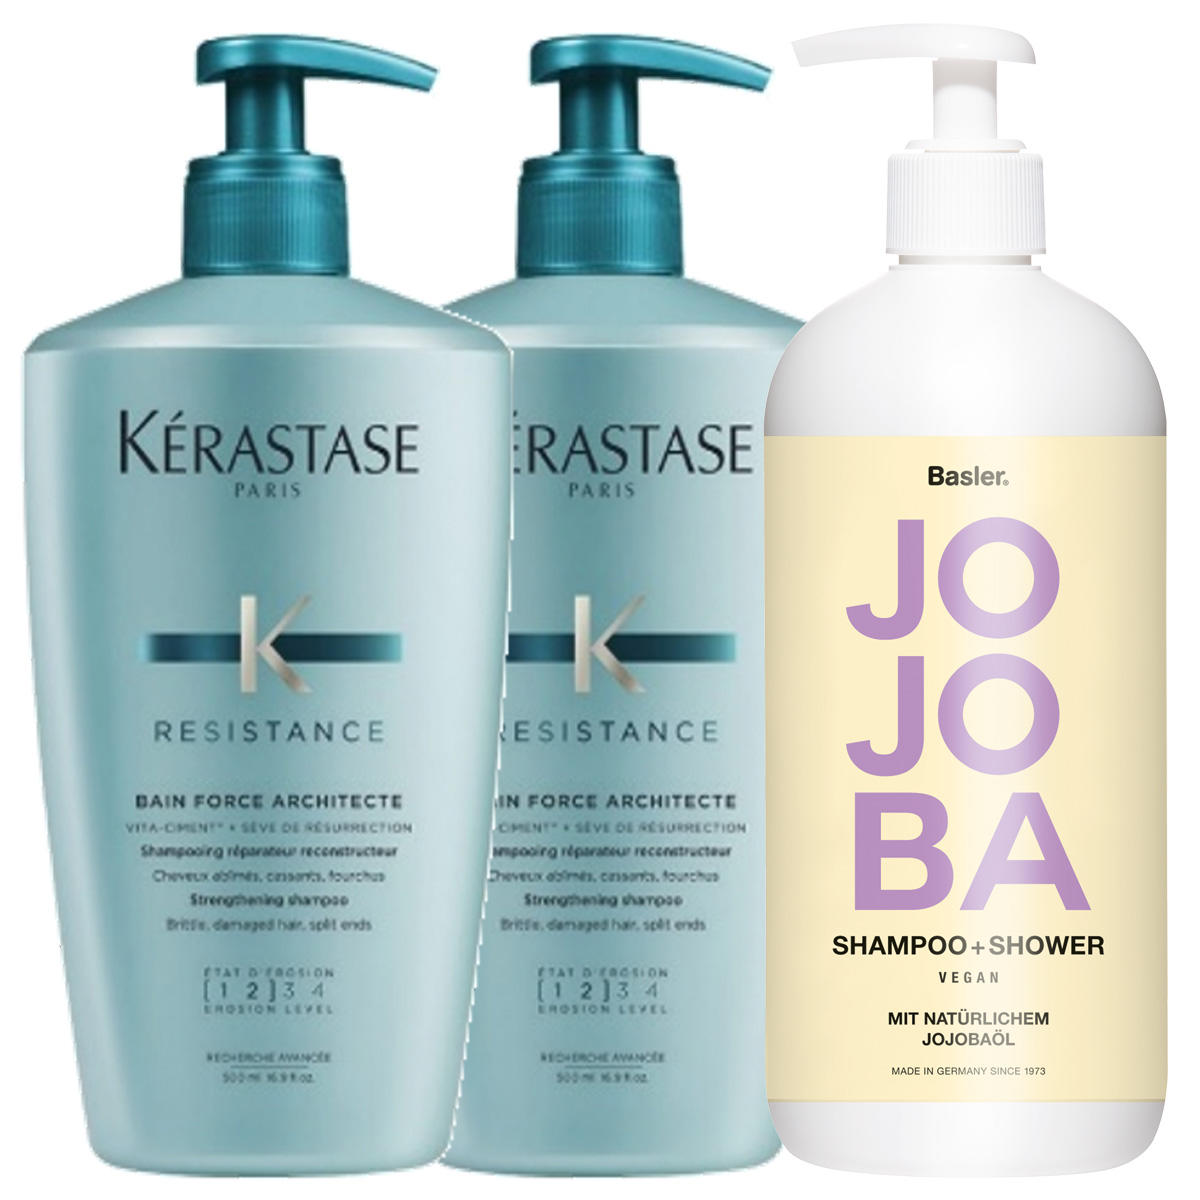 Kérastase Resistance Bain Force Architecte Bundle 2 x 500 ml + Basler Jojoba Shampoo & Shower 500 ml gratuit - 1